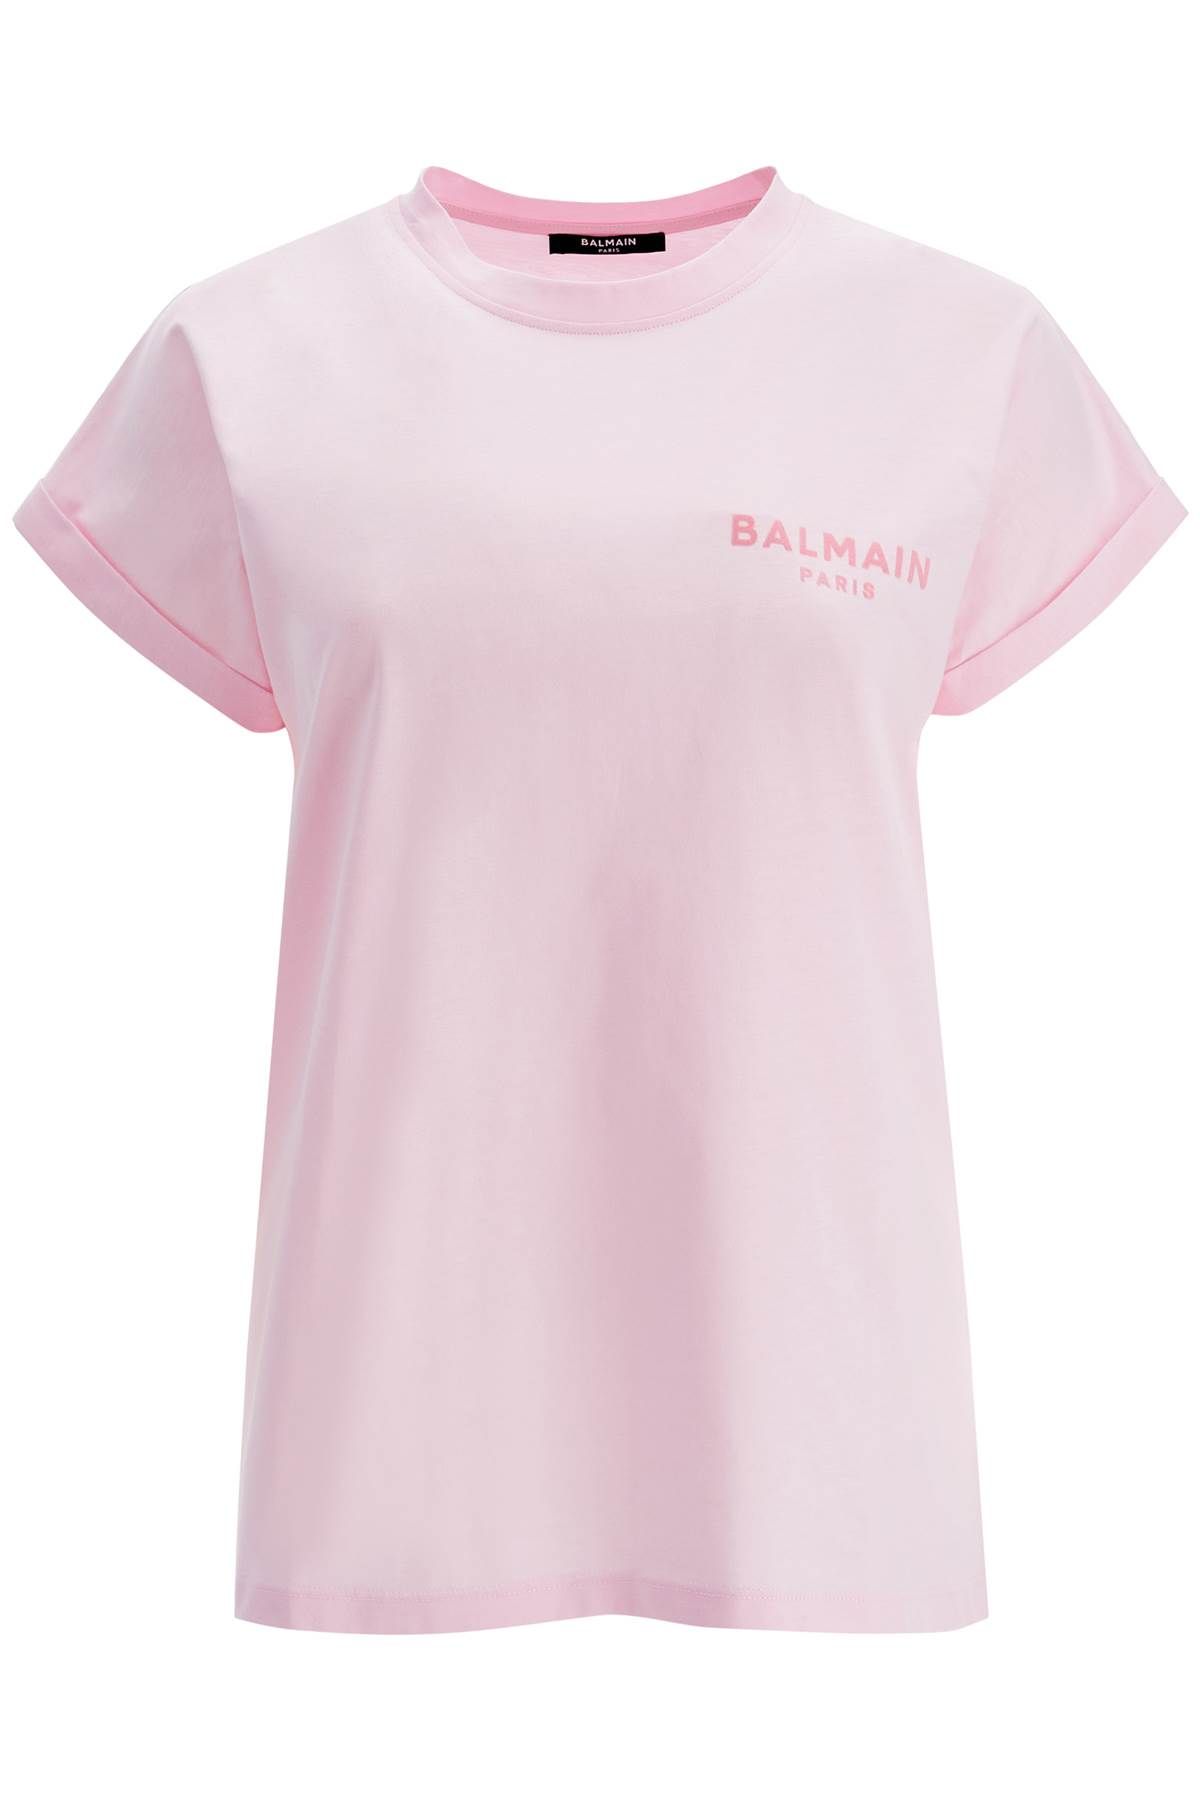 Balmain BALMAIN flocked logo t-shirt